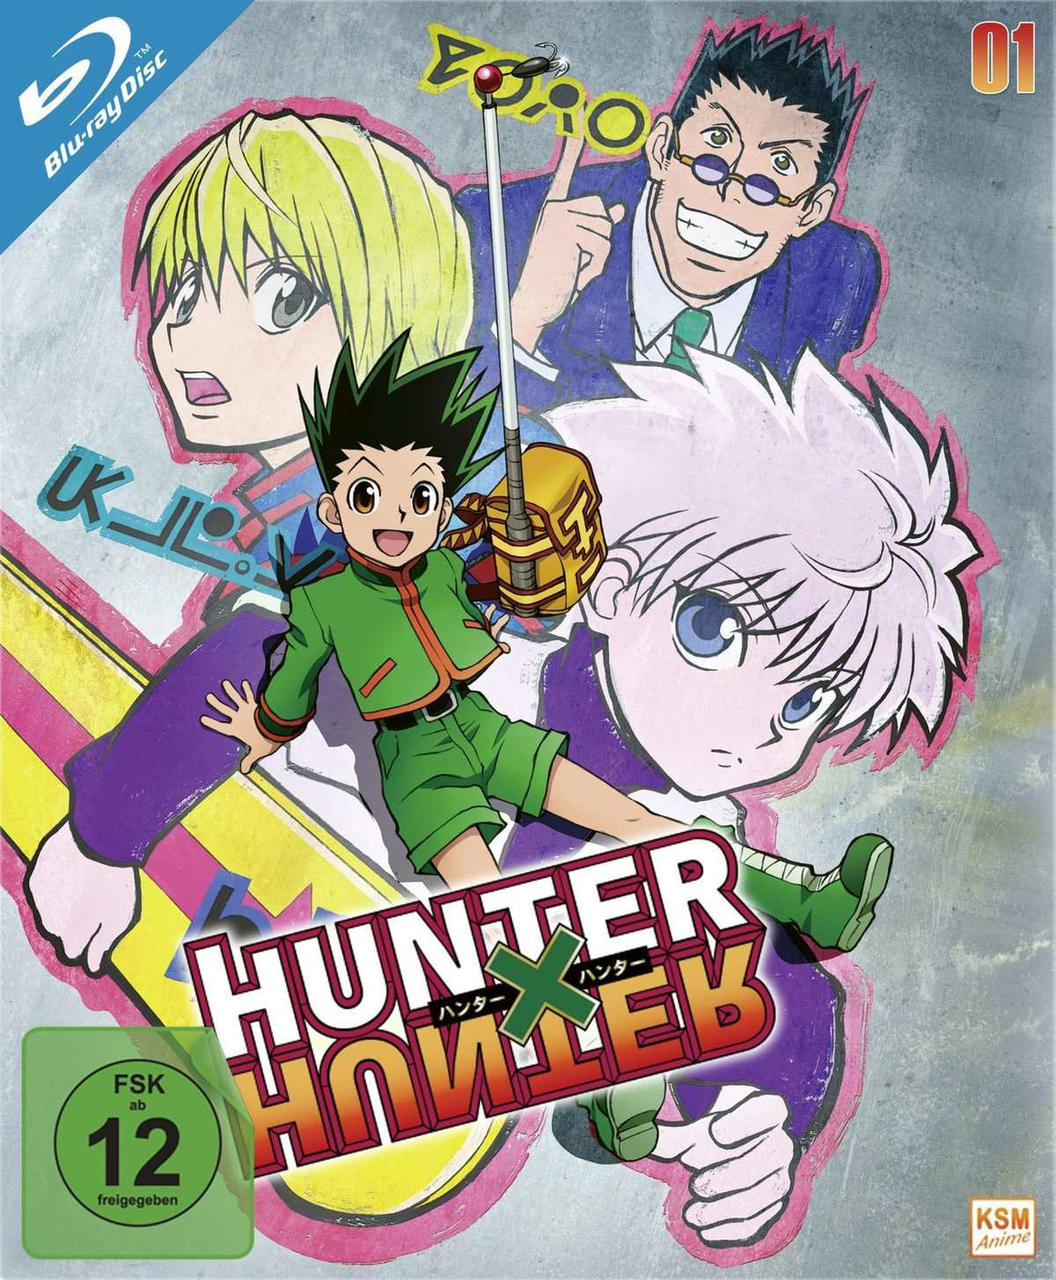 Edition: HunterxHunter Volume Blu-ray 1 - New